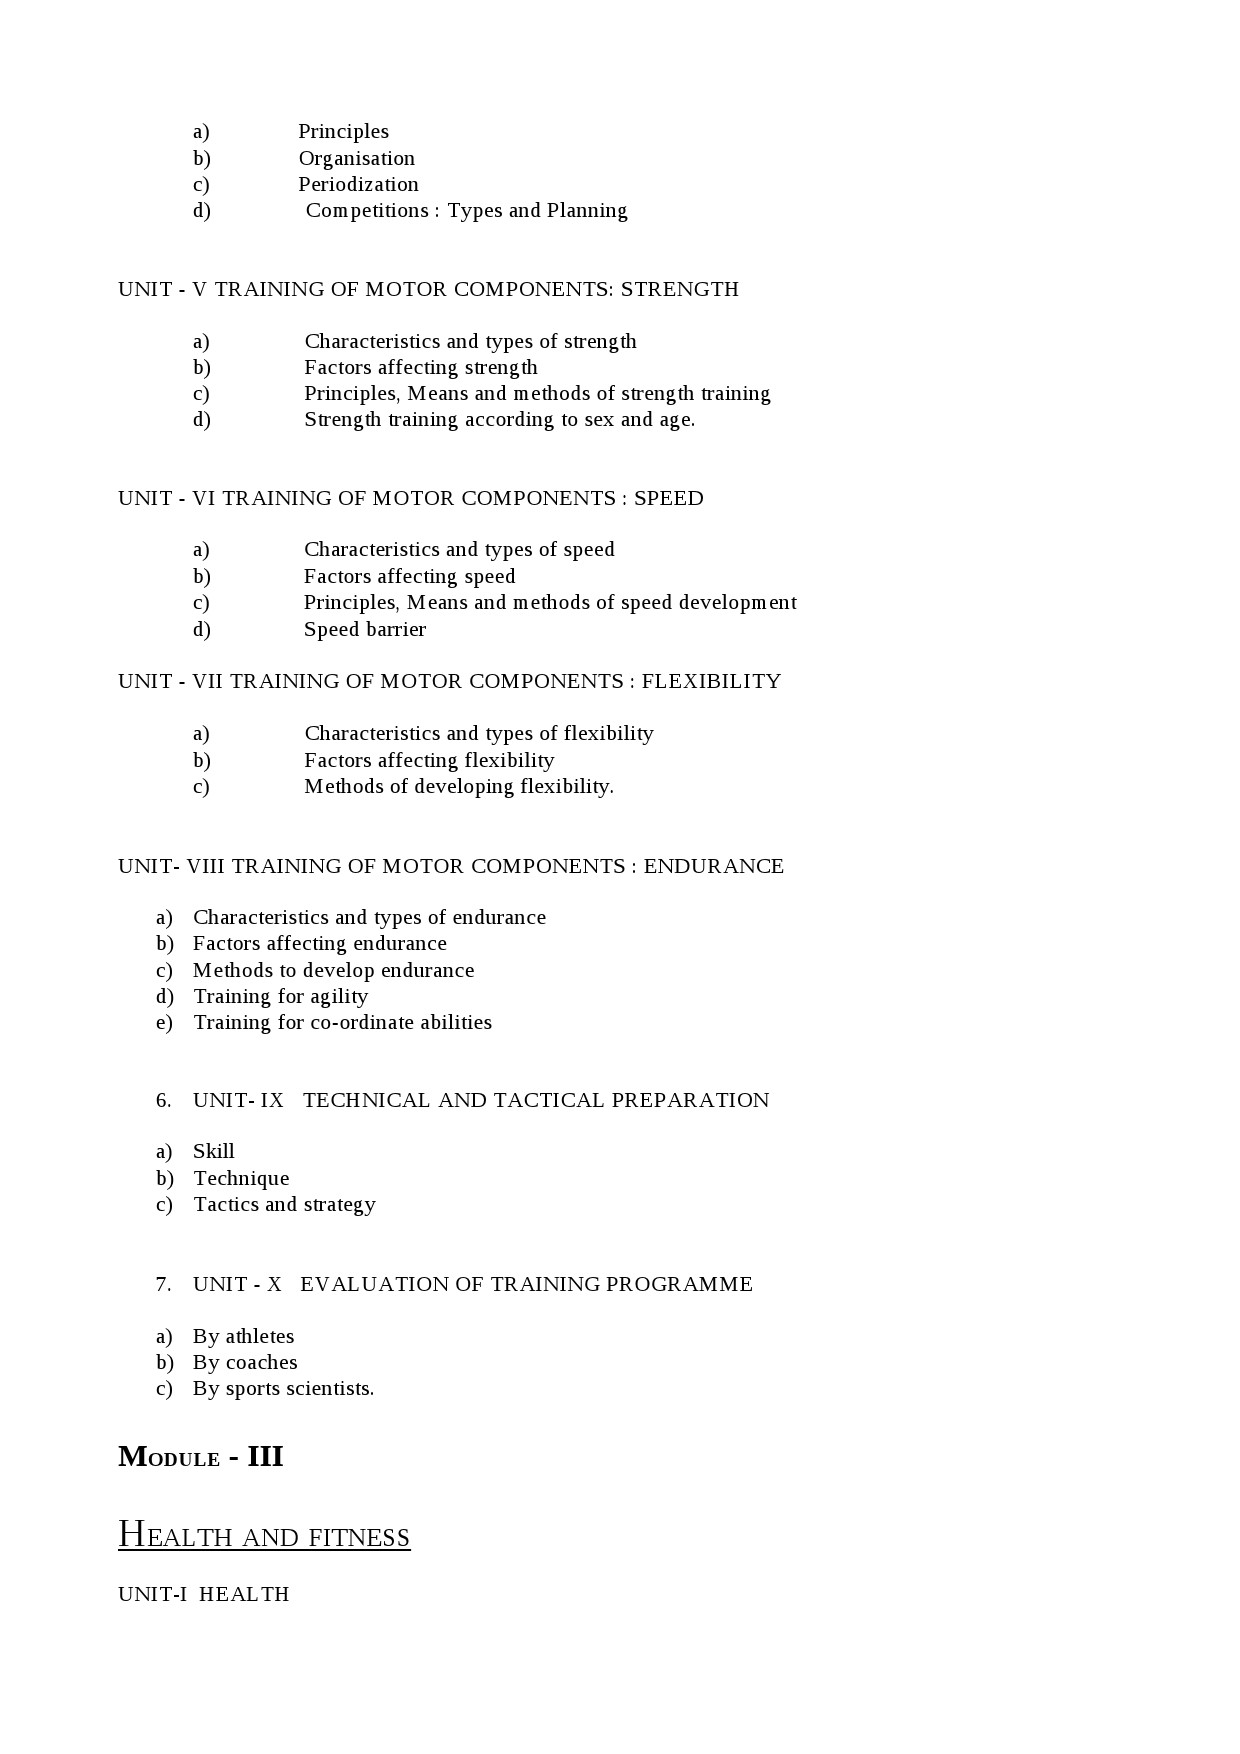 Science Syllabus for Kerala PSC 2021 Exam - Notification Image 28